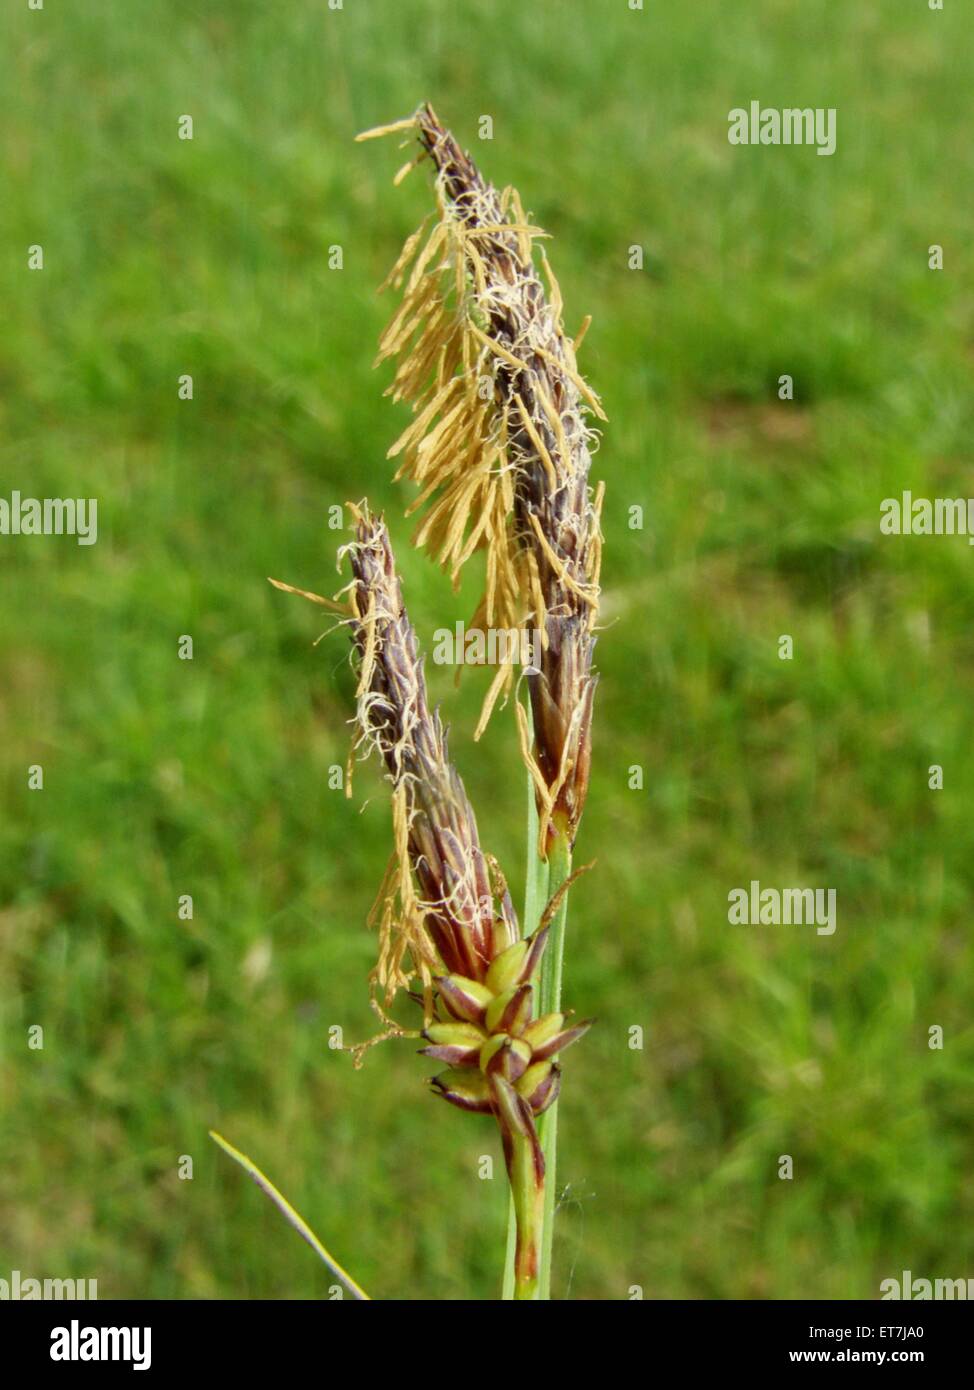 Blaugruene Segge (Carex flacca), maennliche Bluetenstaende | glaucous sedge (Carex flacca), male inflorescences Stock Photo